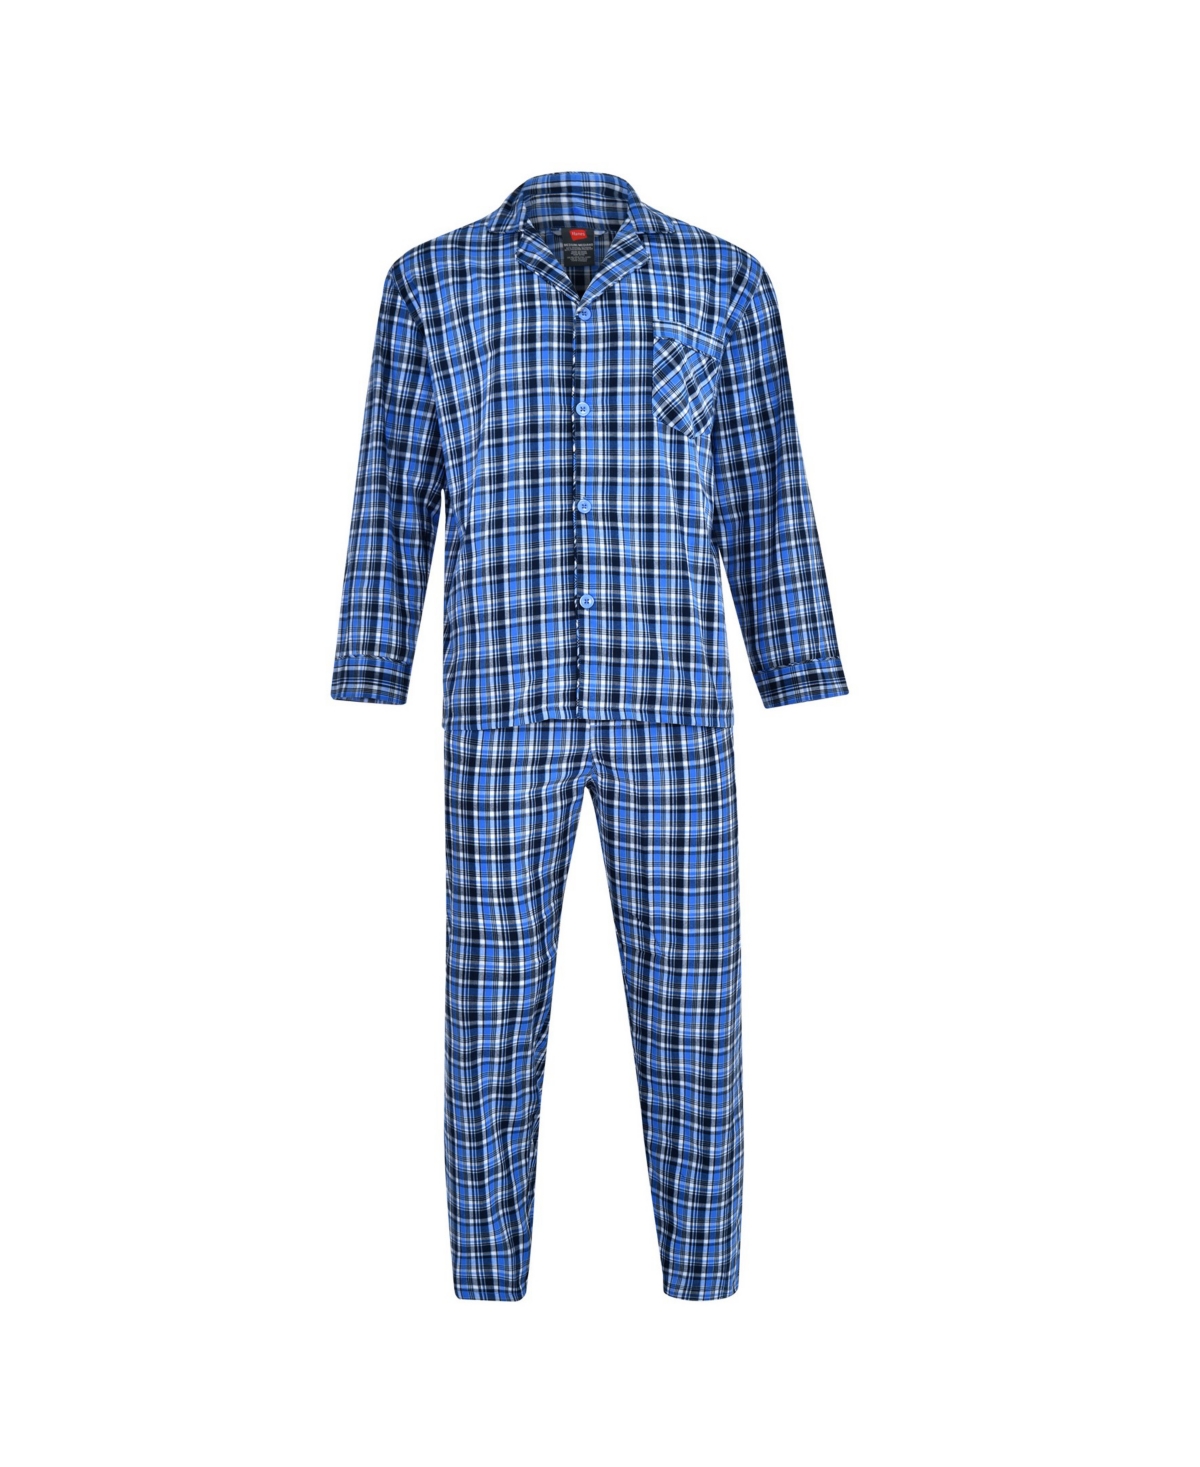 Hanes Platinum Hanes Men's Big and Tall Cvc Broadcloth Pajama Set